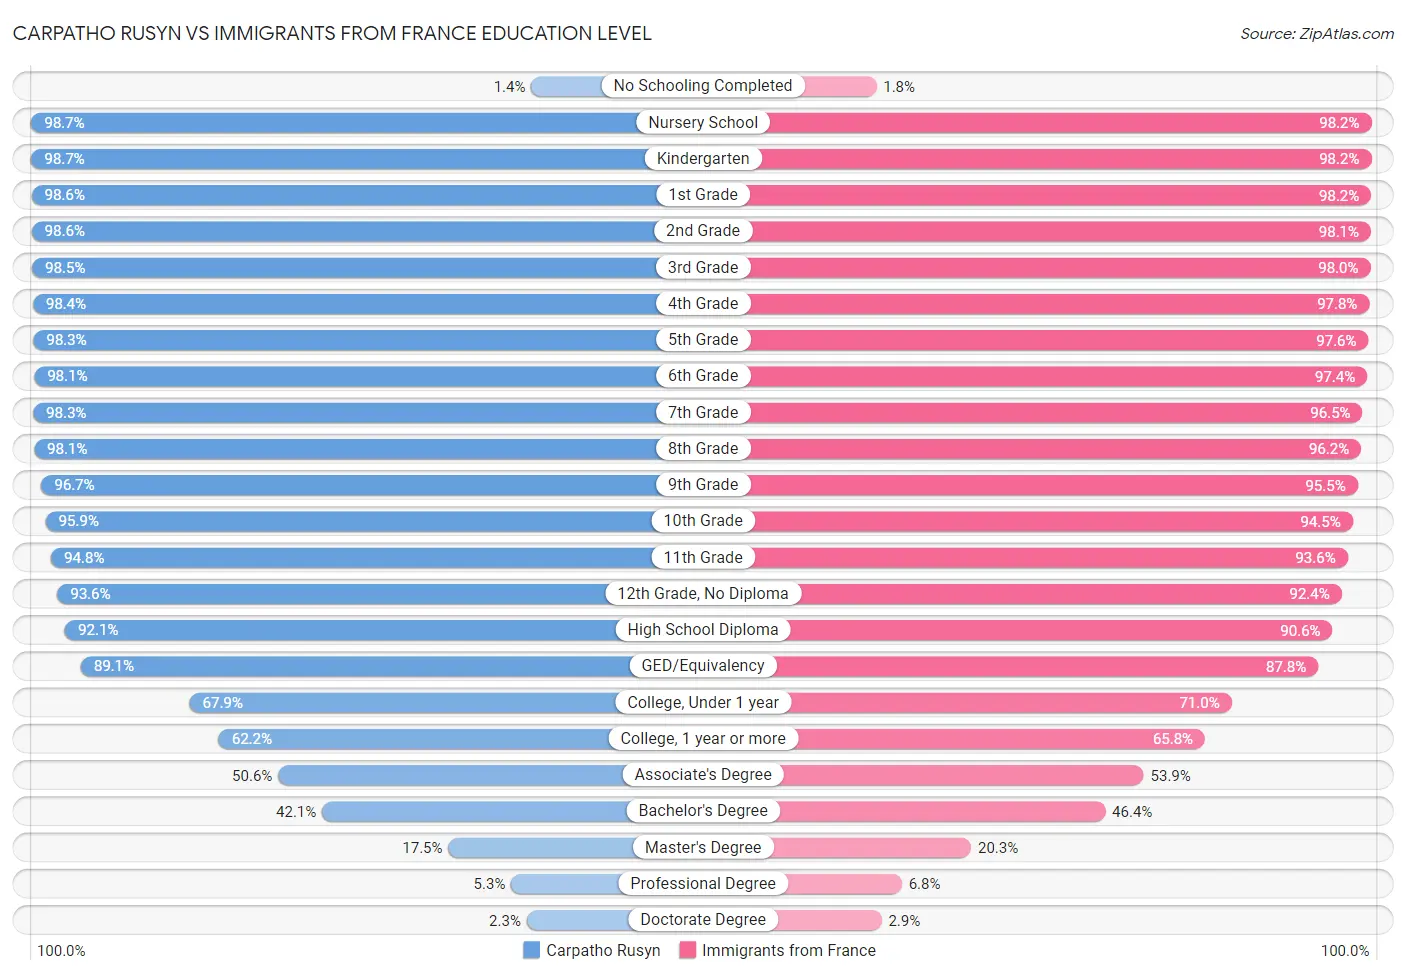 Carpatho Rusyn vs Immigrants from France Education Level